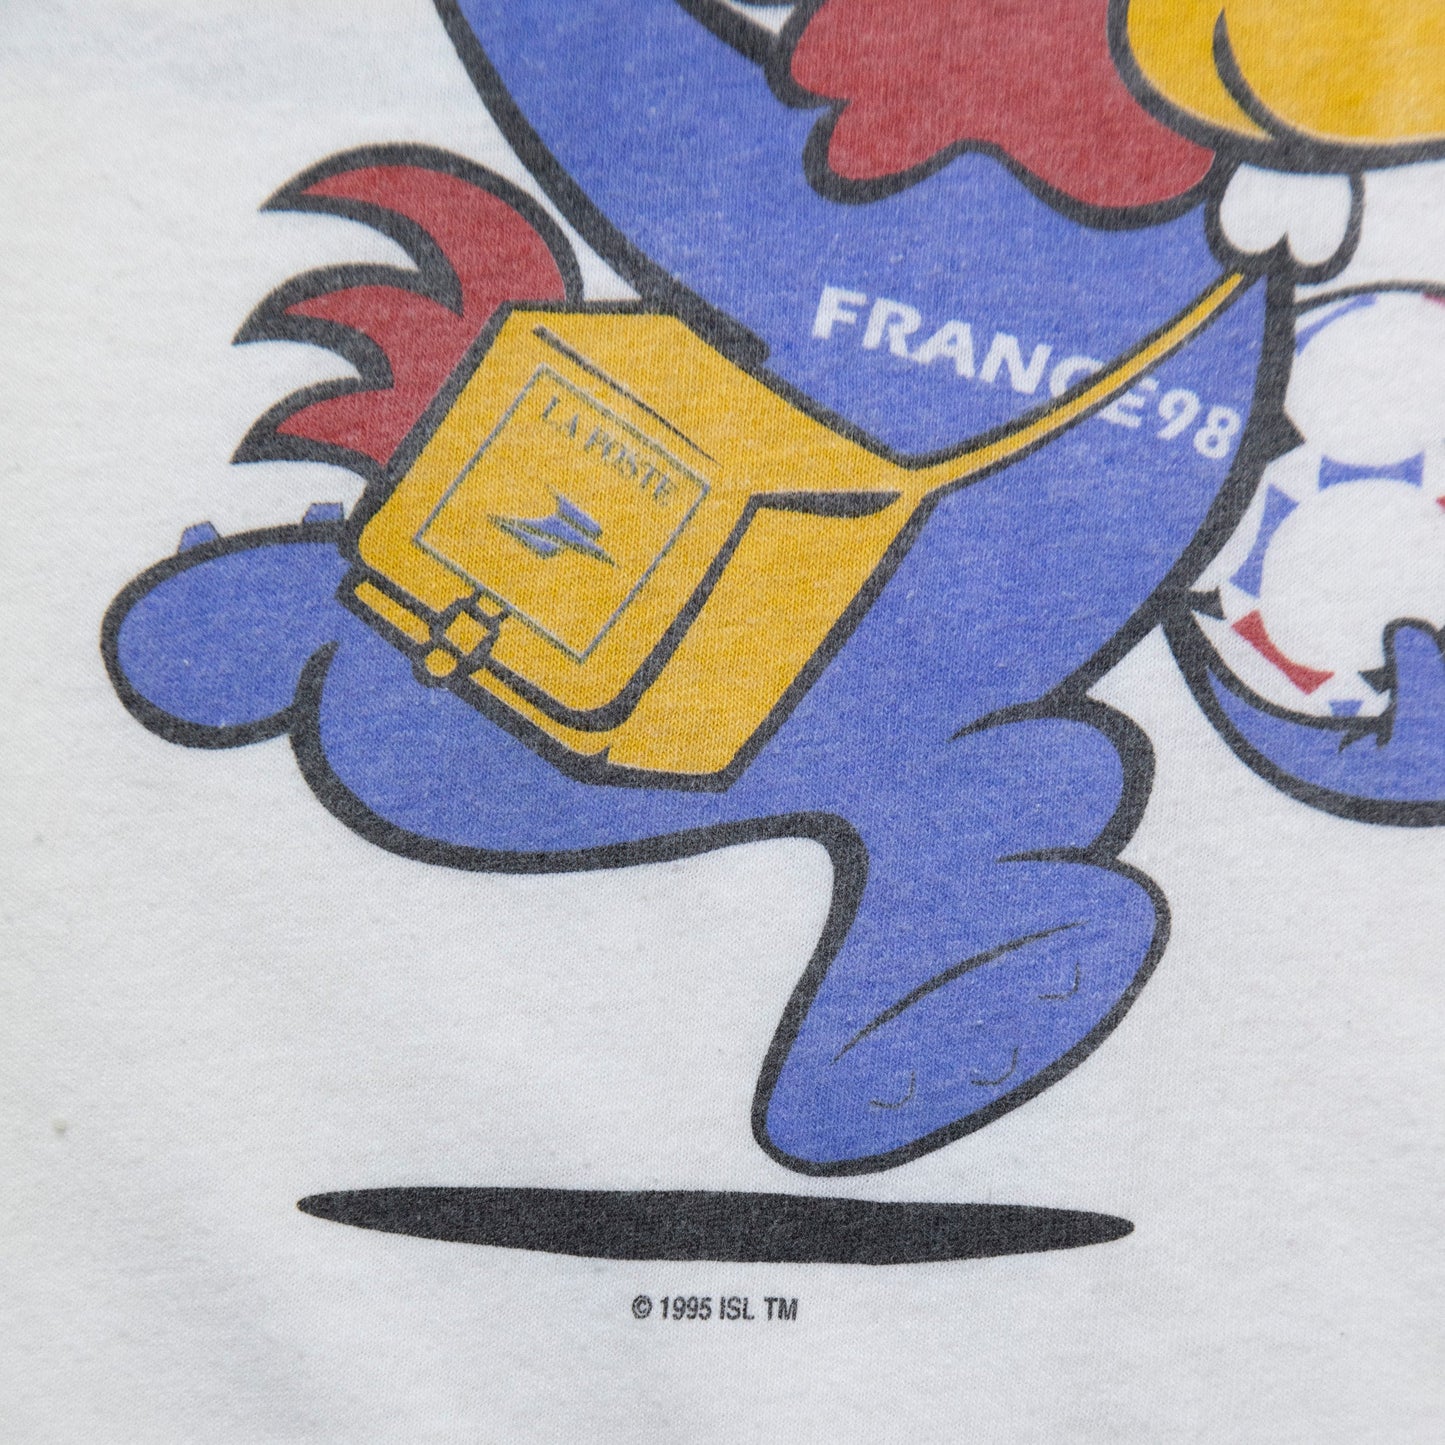 1995 La Poste France 98 Single Stitch Tee